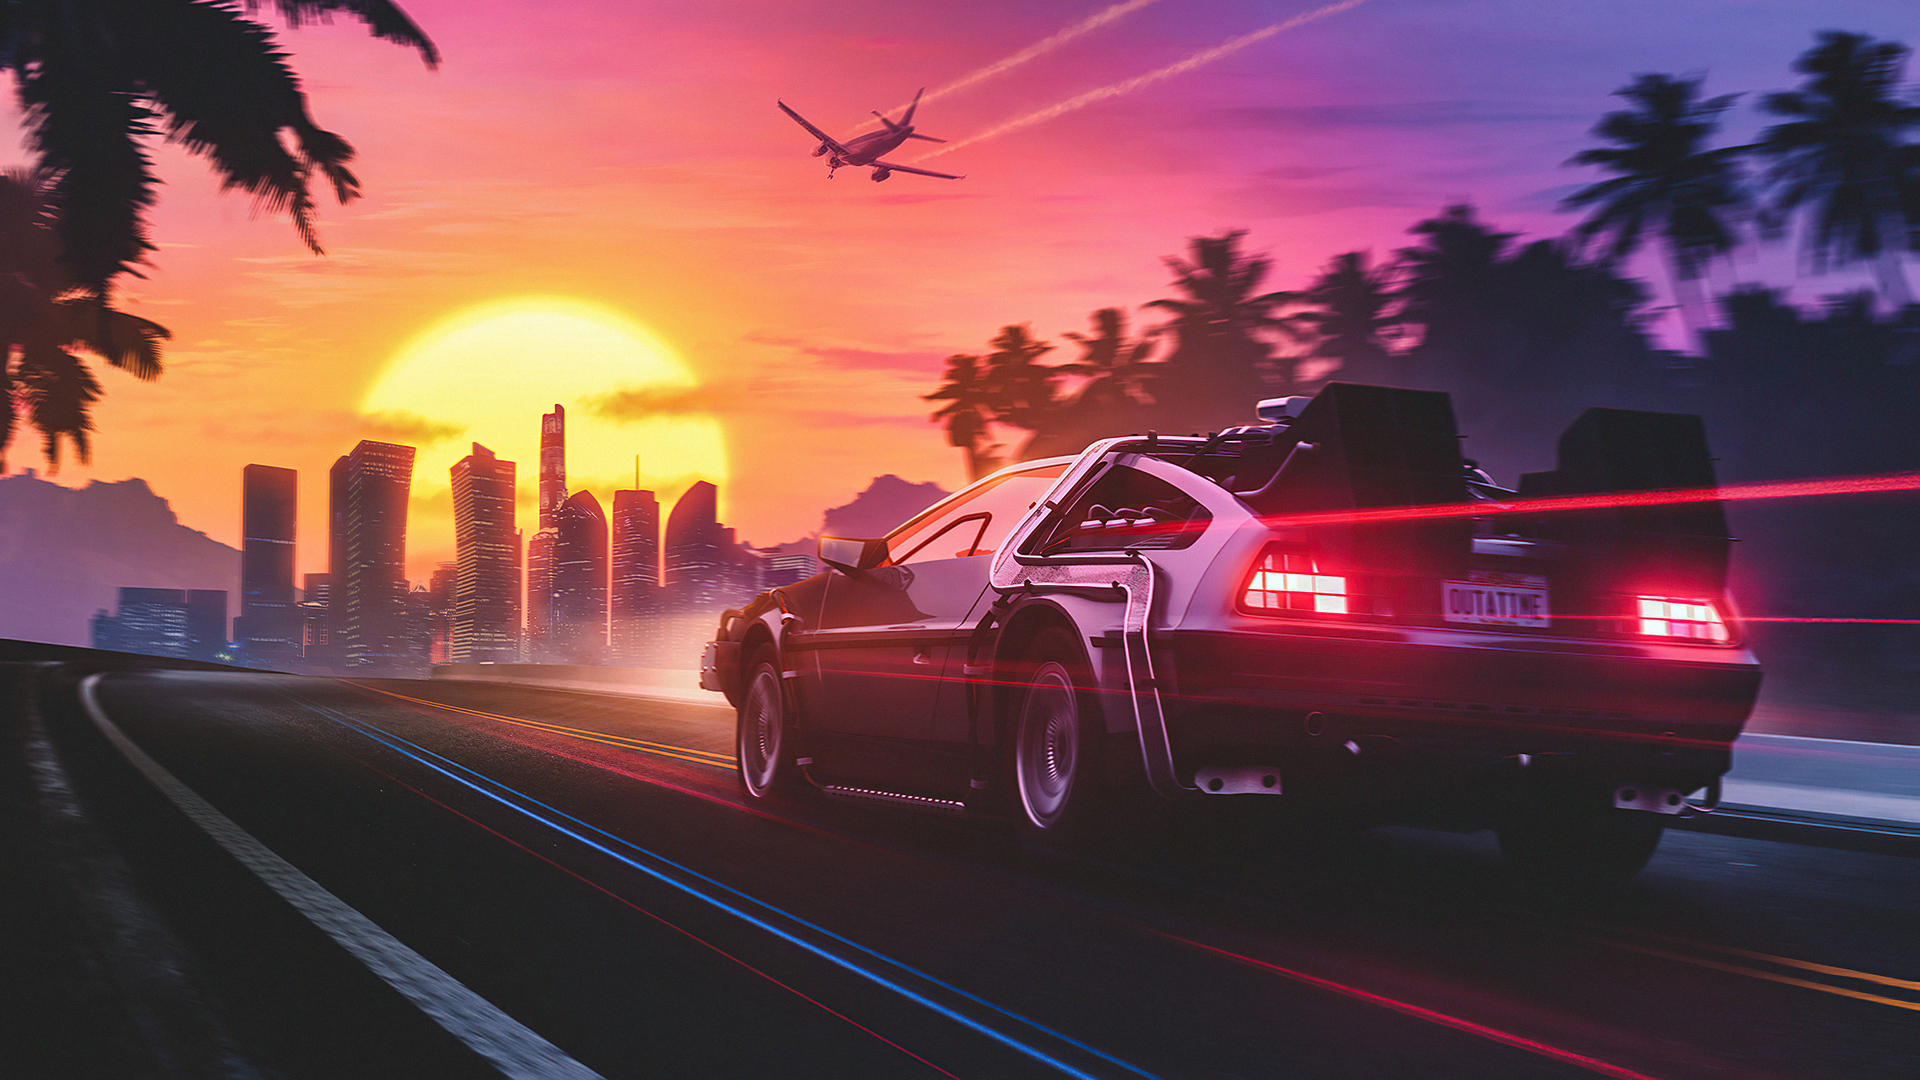 A stylish DeLorean car in a vibrant HD desktop wallpaper and background.